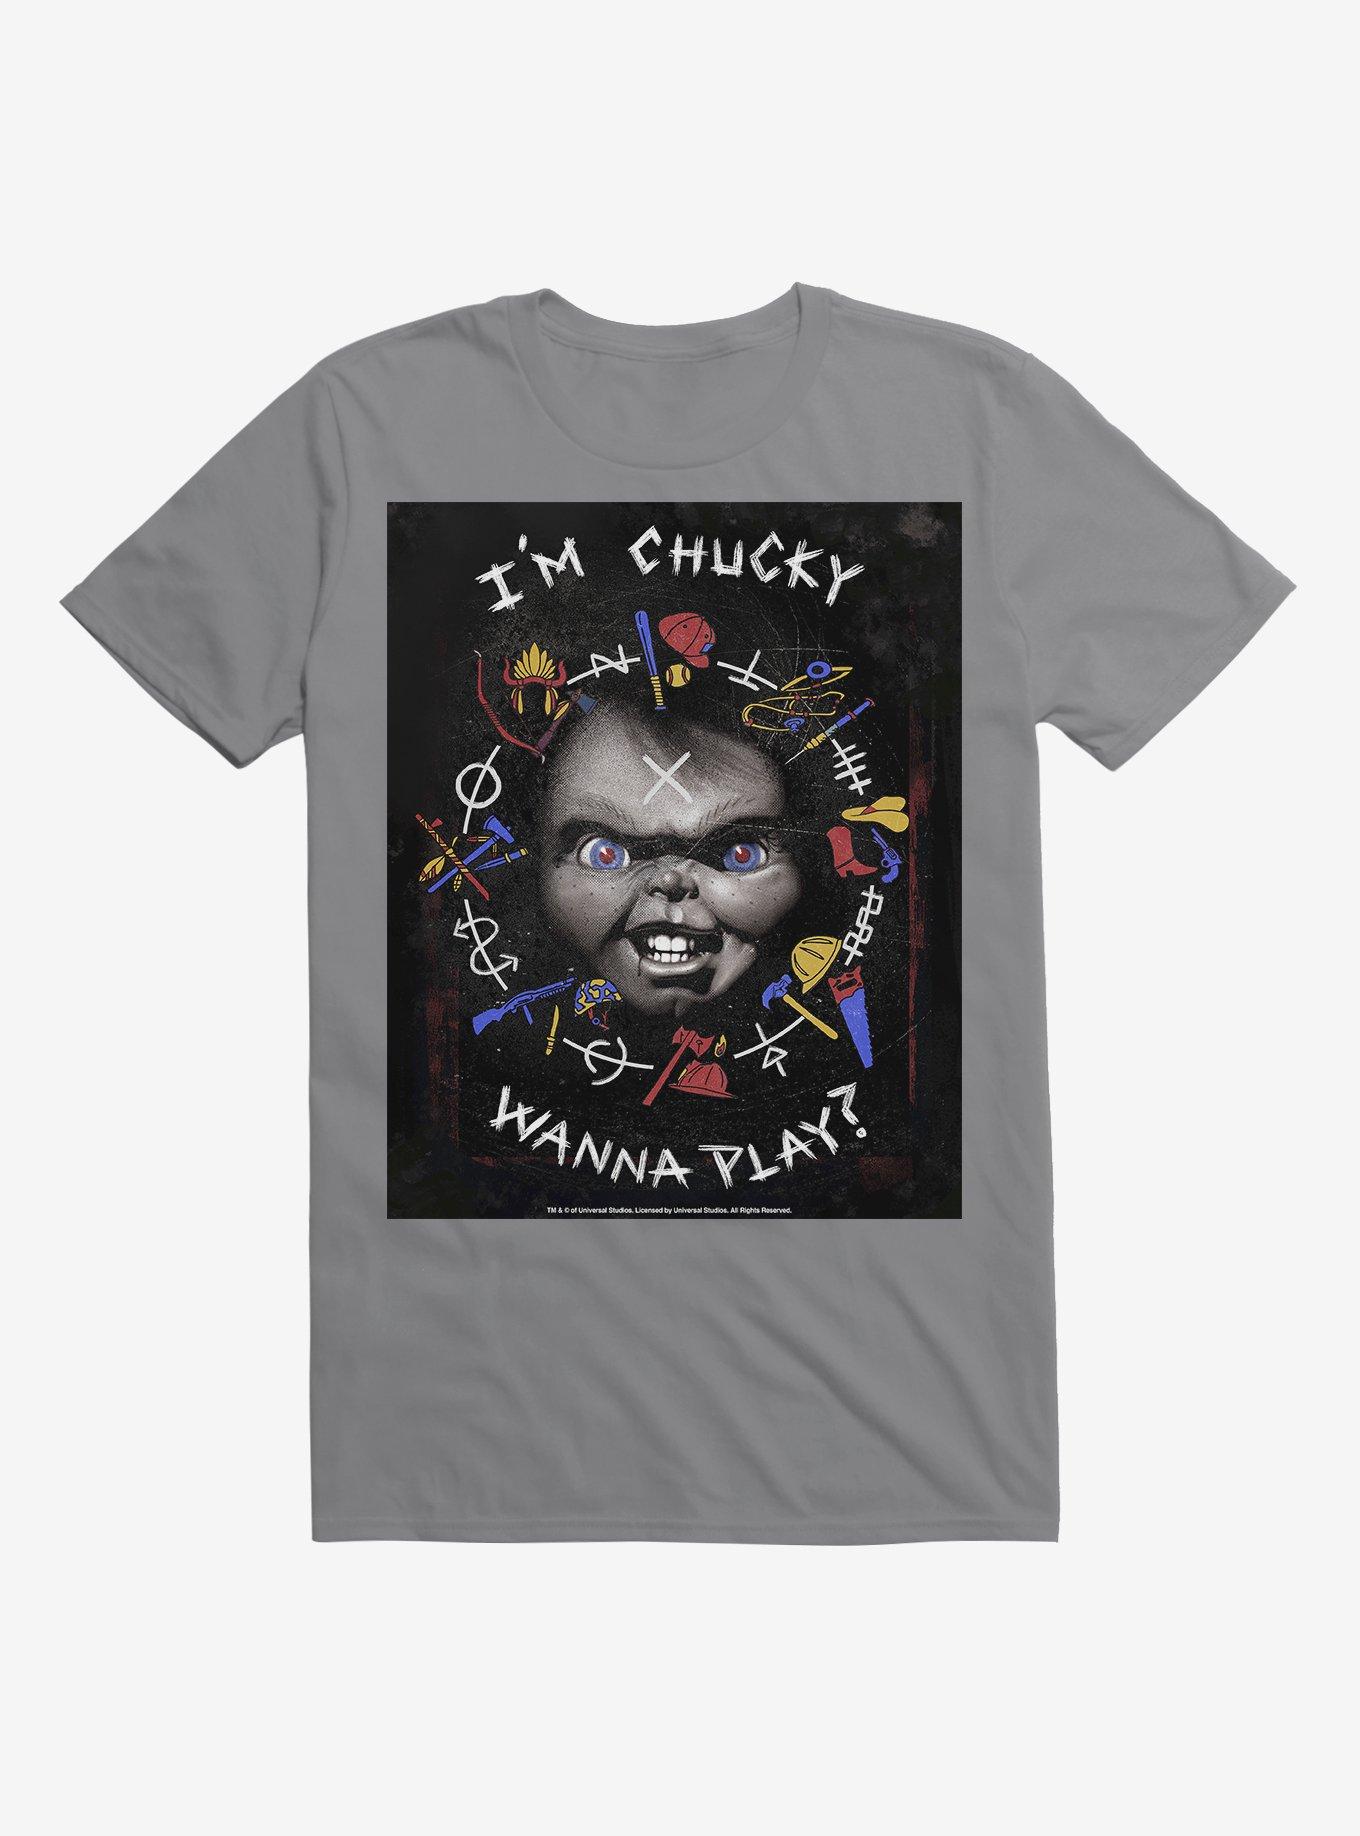 Chucky I'm Wanna Play T-Shirt